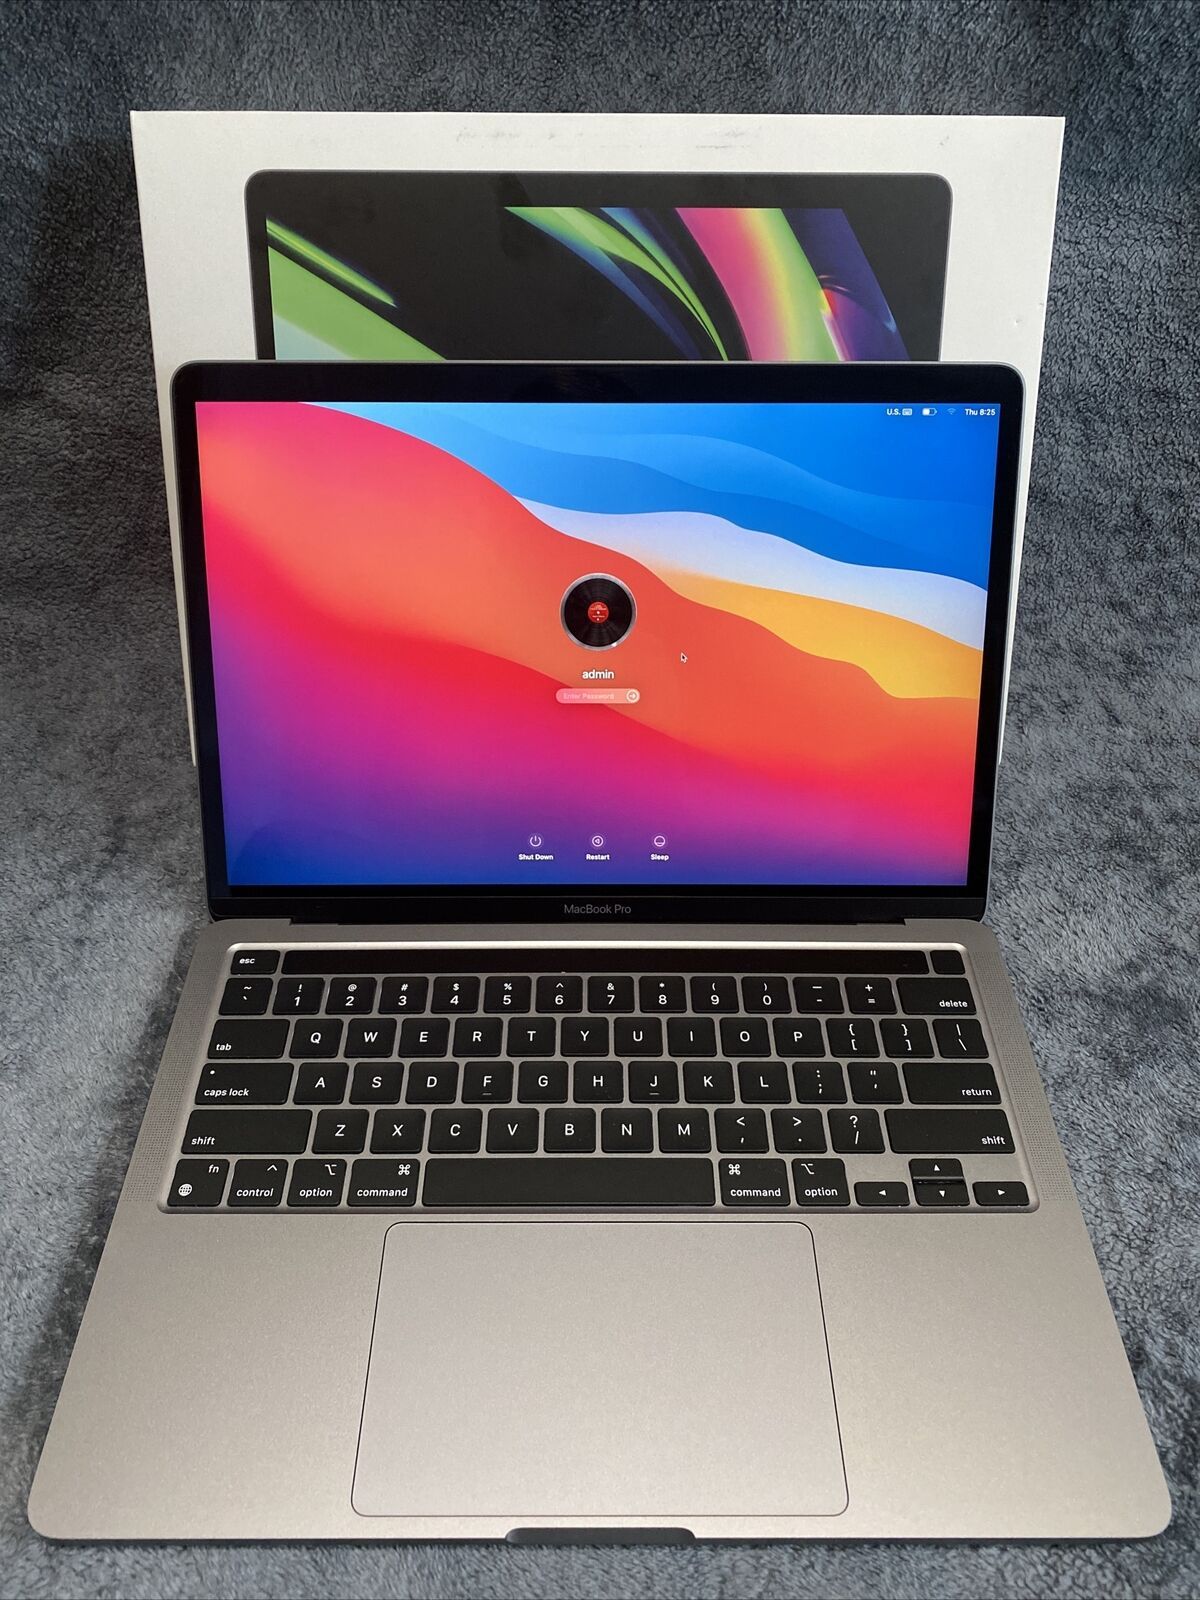 Apple MacBook Pro 13in (256GB SSD, M1, 8GB) Laptop - Space Gray - MYD82LL/A (21) - $879.09